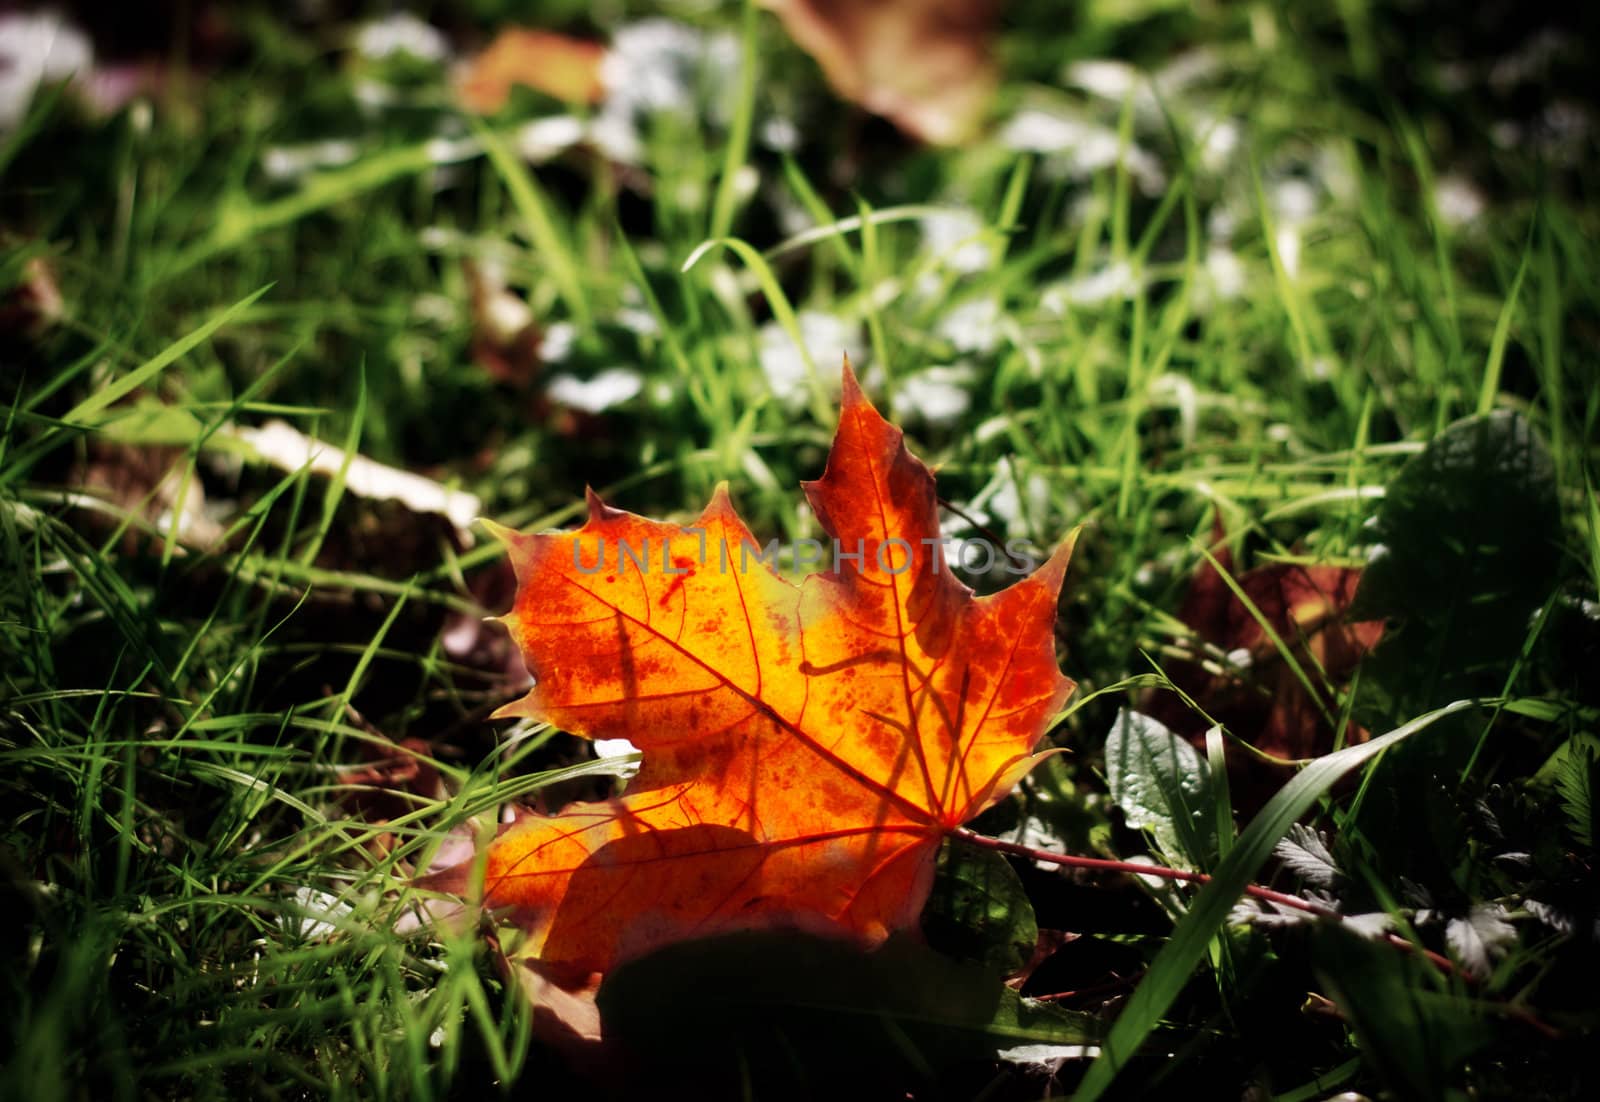 yellow autumn mapple leaf in grass